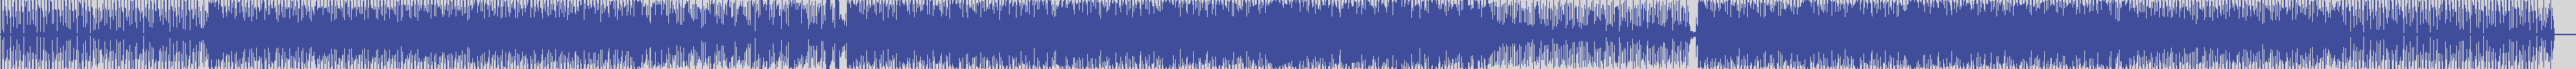 suxess [SX022] Magnvm! - Ariannaaah [Original Mix] audio wave form